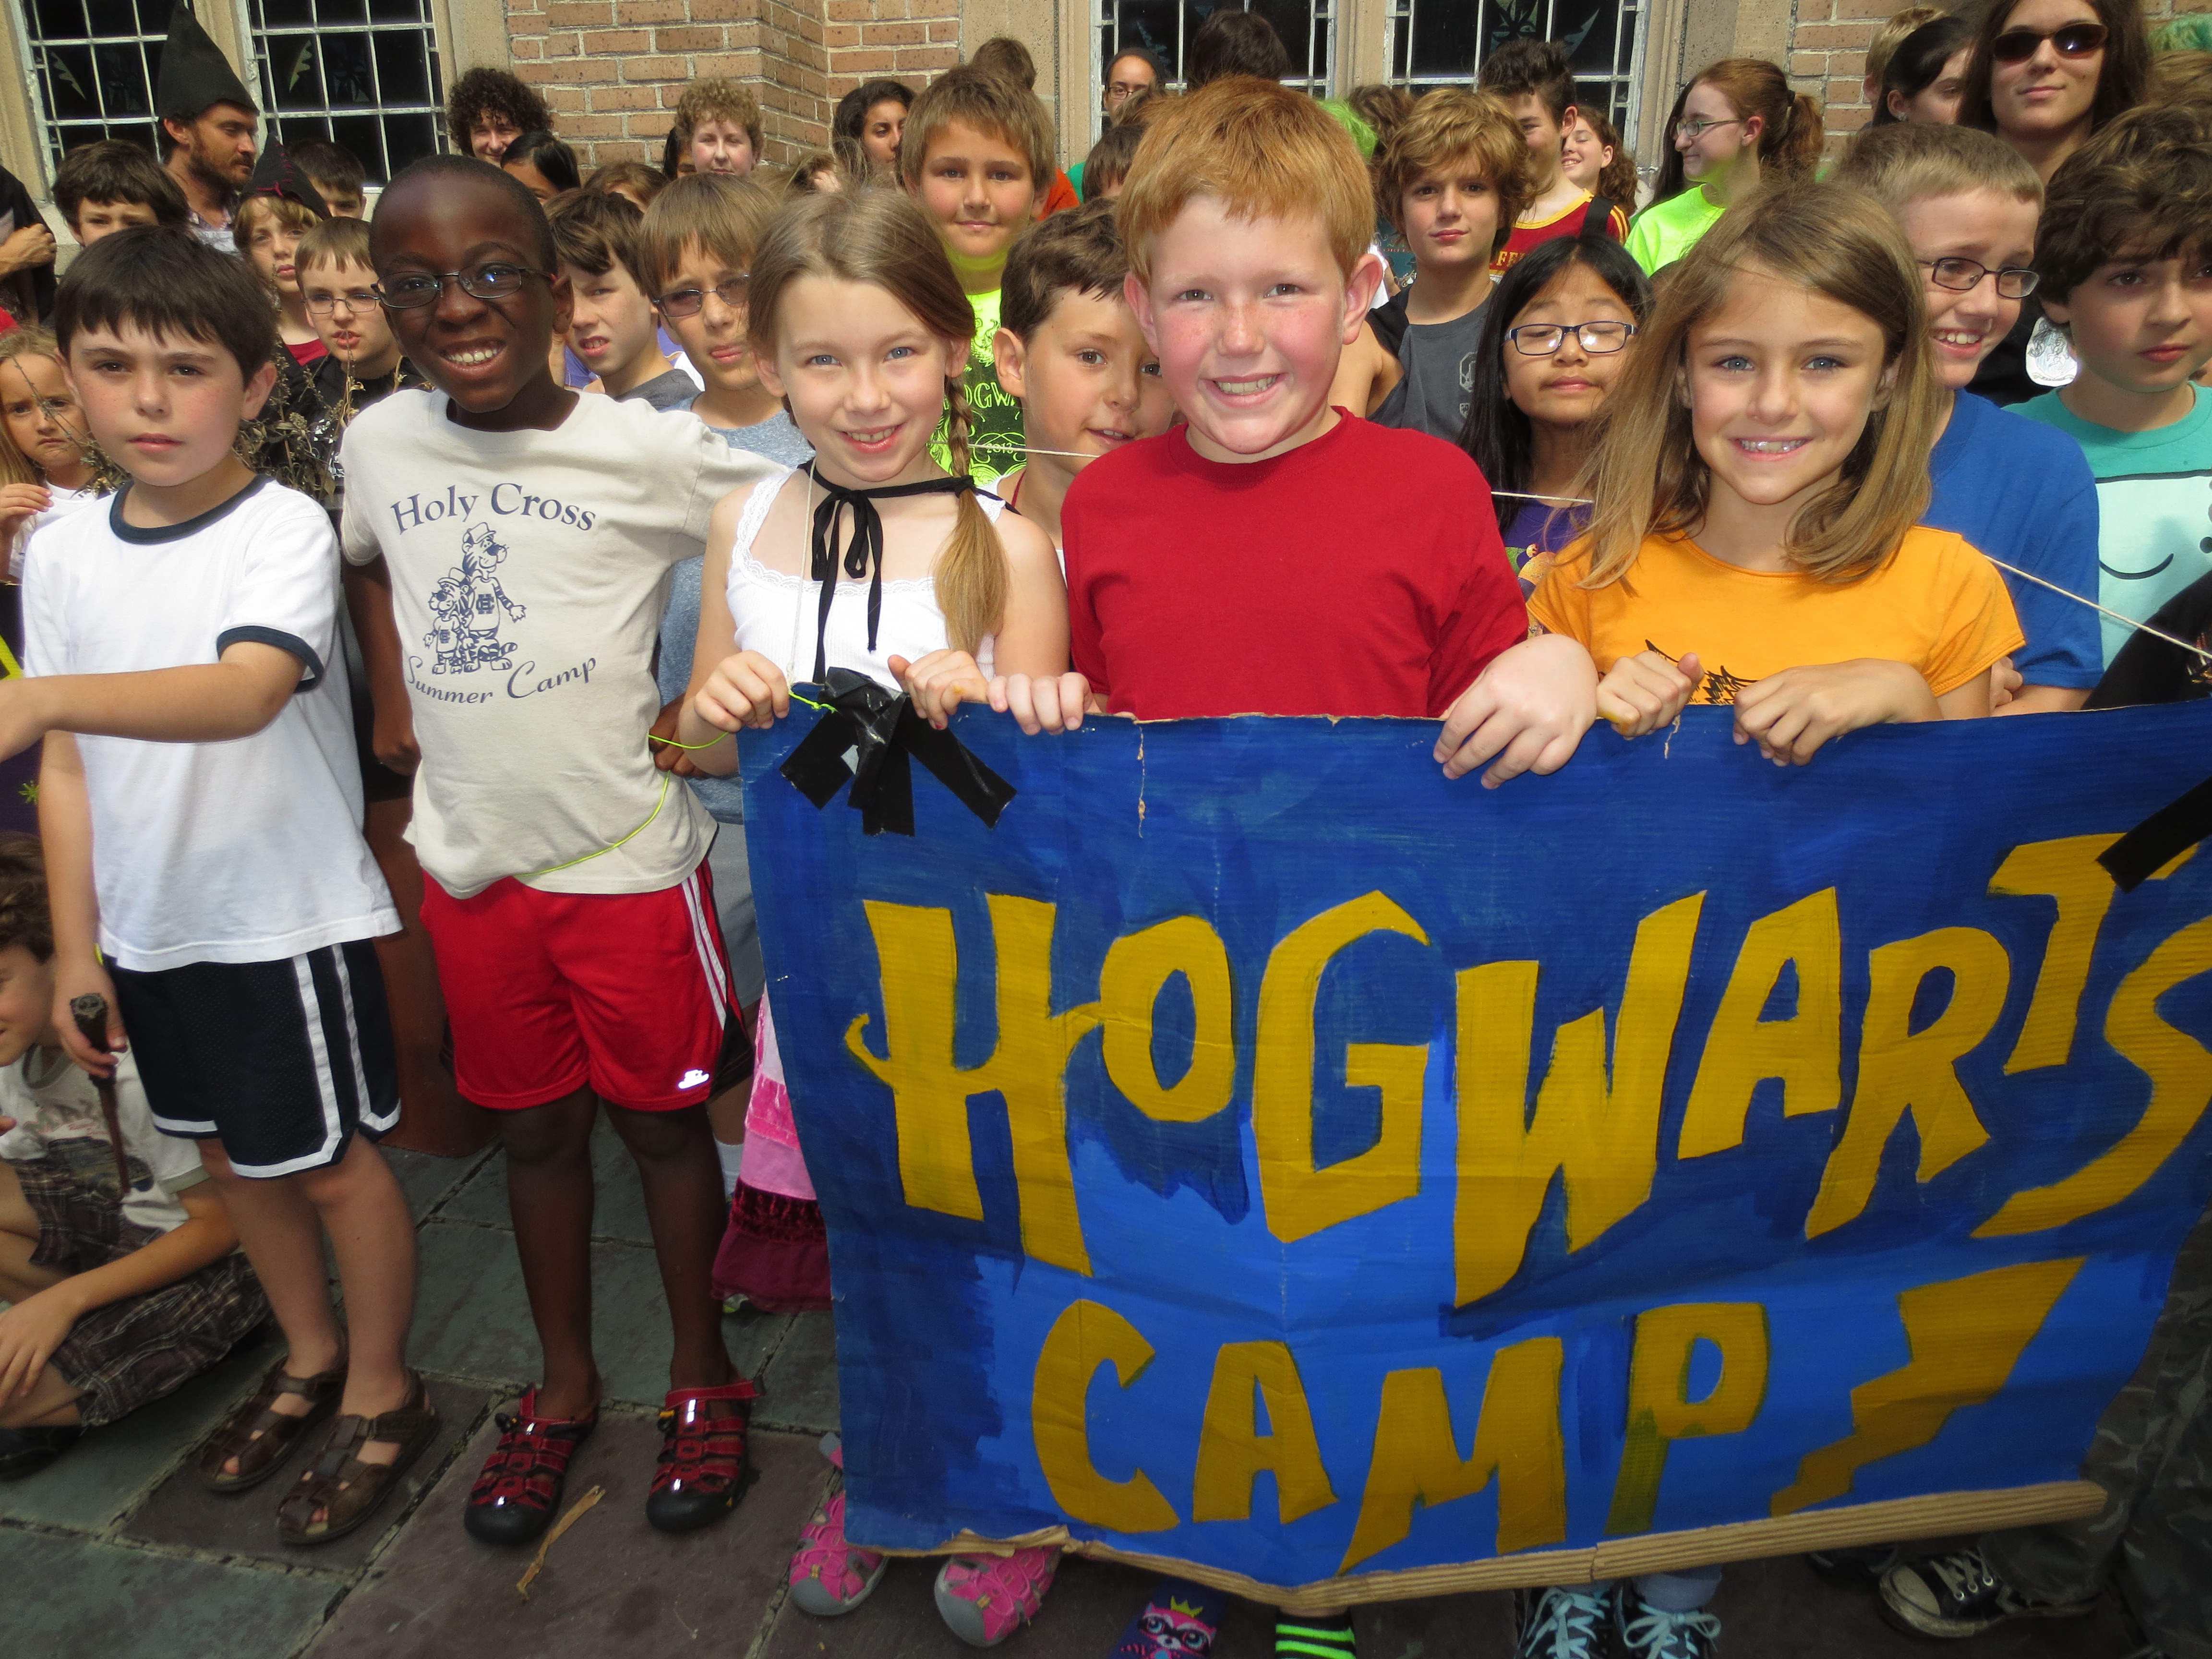 Kids at Hogwarts Camp